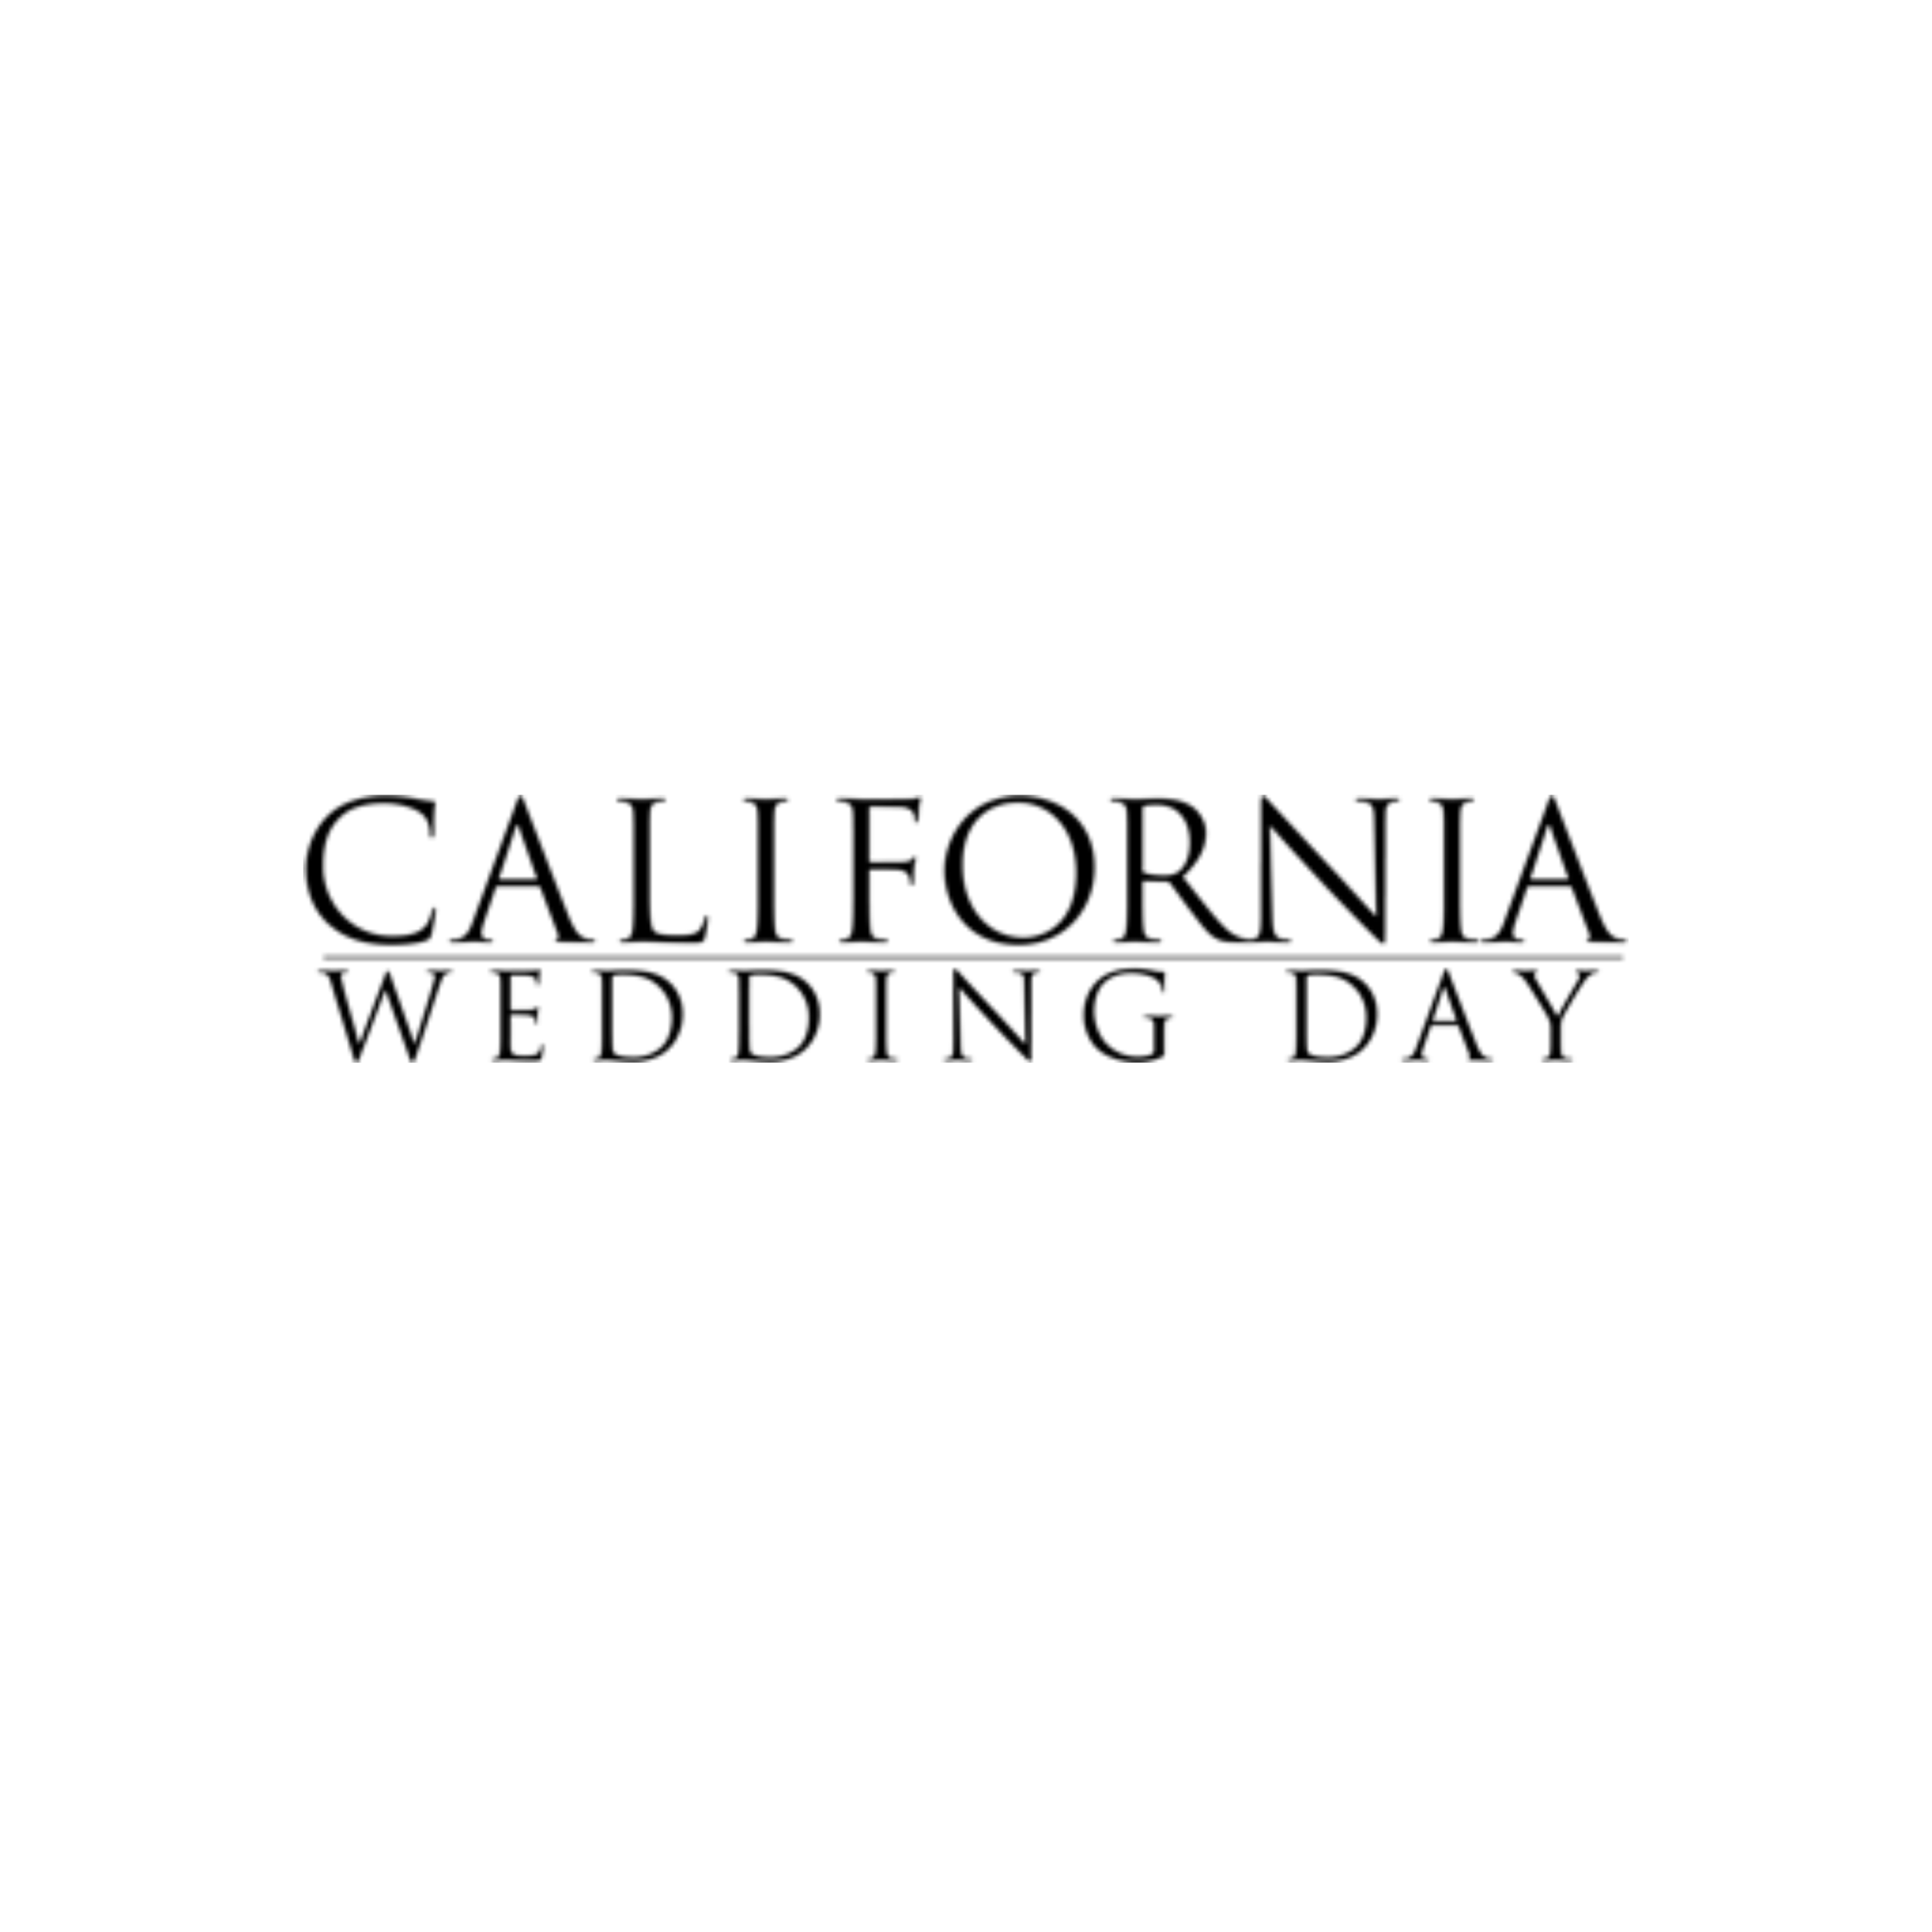 California Wedding Day.png